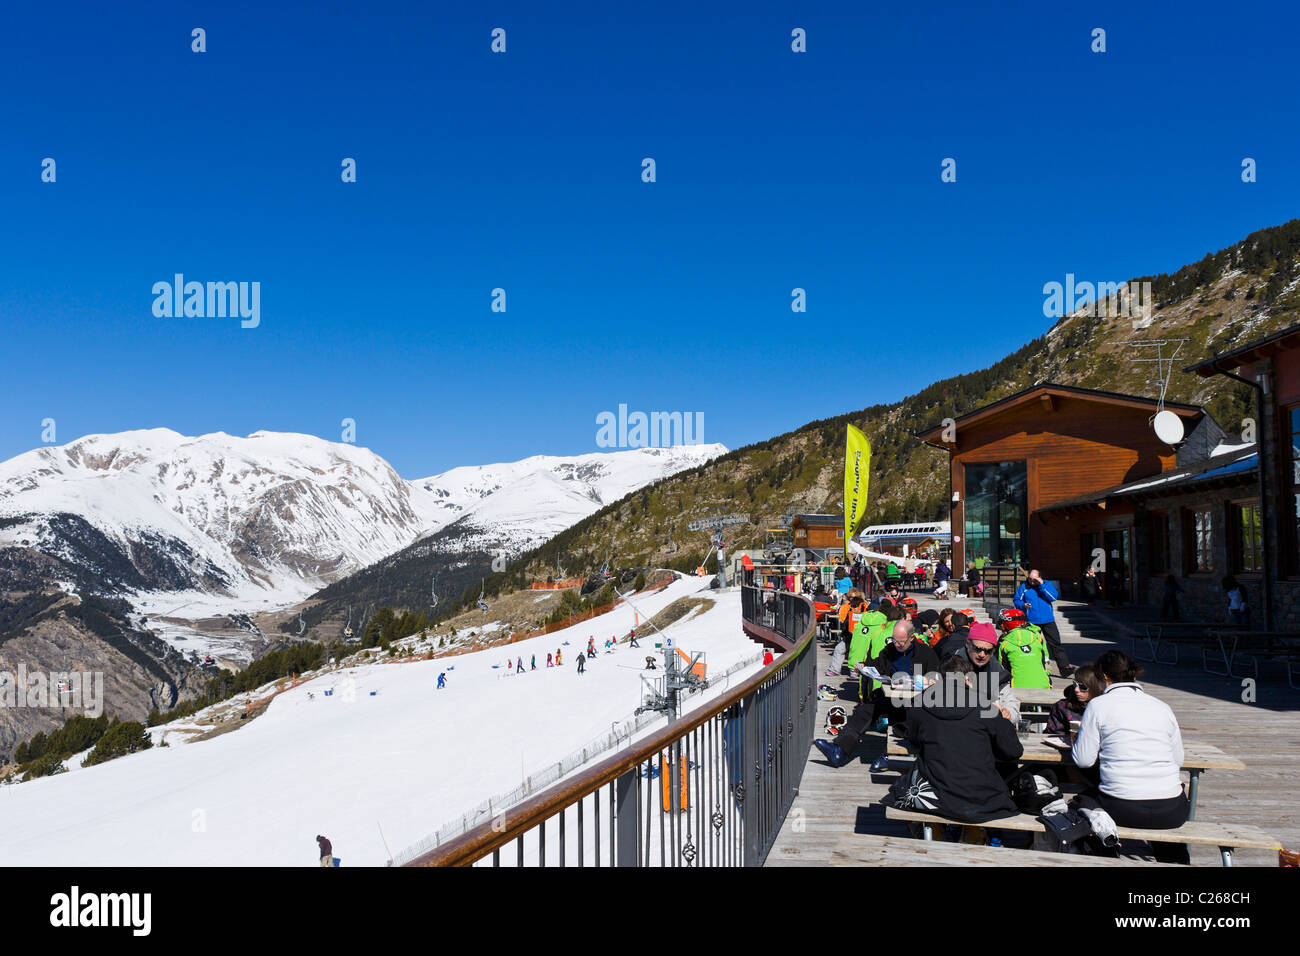 View from the terrace of a restaurant on the slopes at the top of the Canillo gondola, Canillo, Grandvalira Ski Area, Andorra Stock Photo